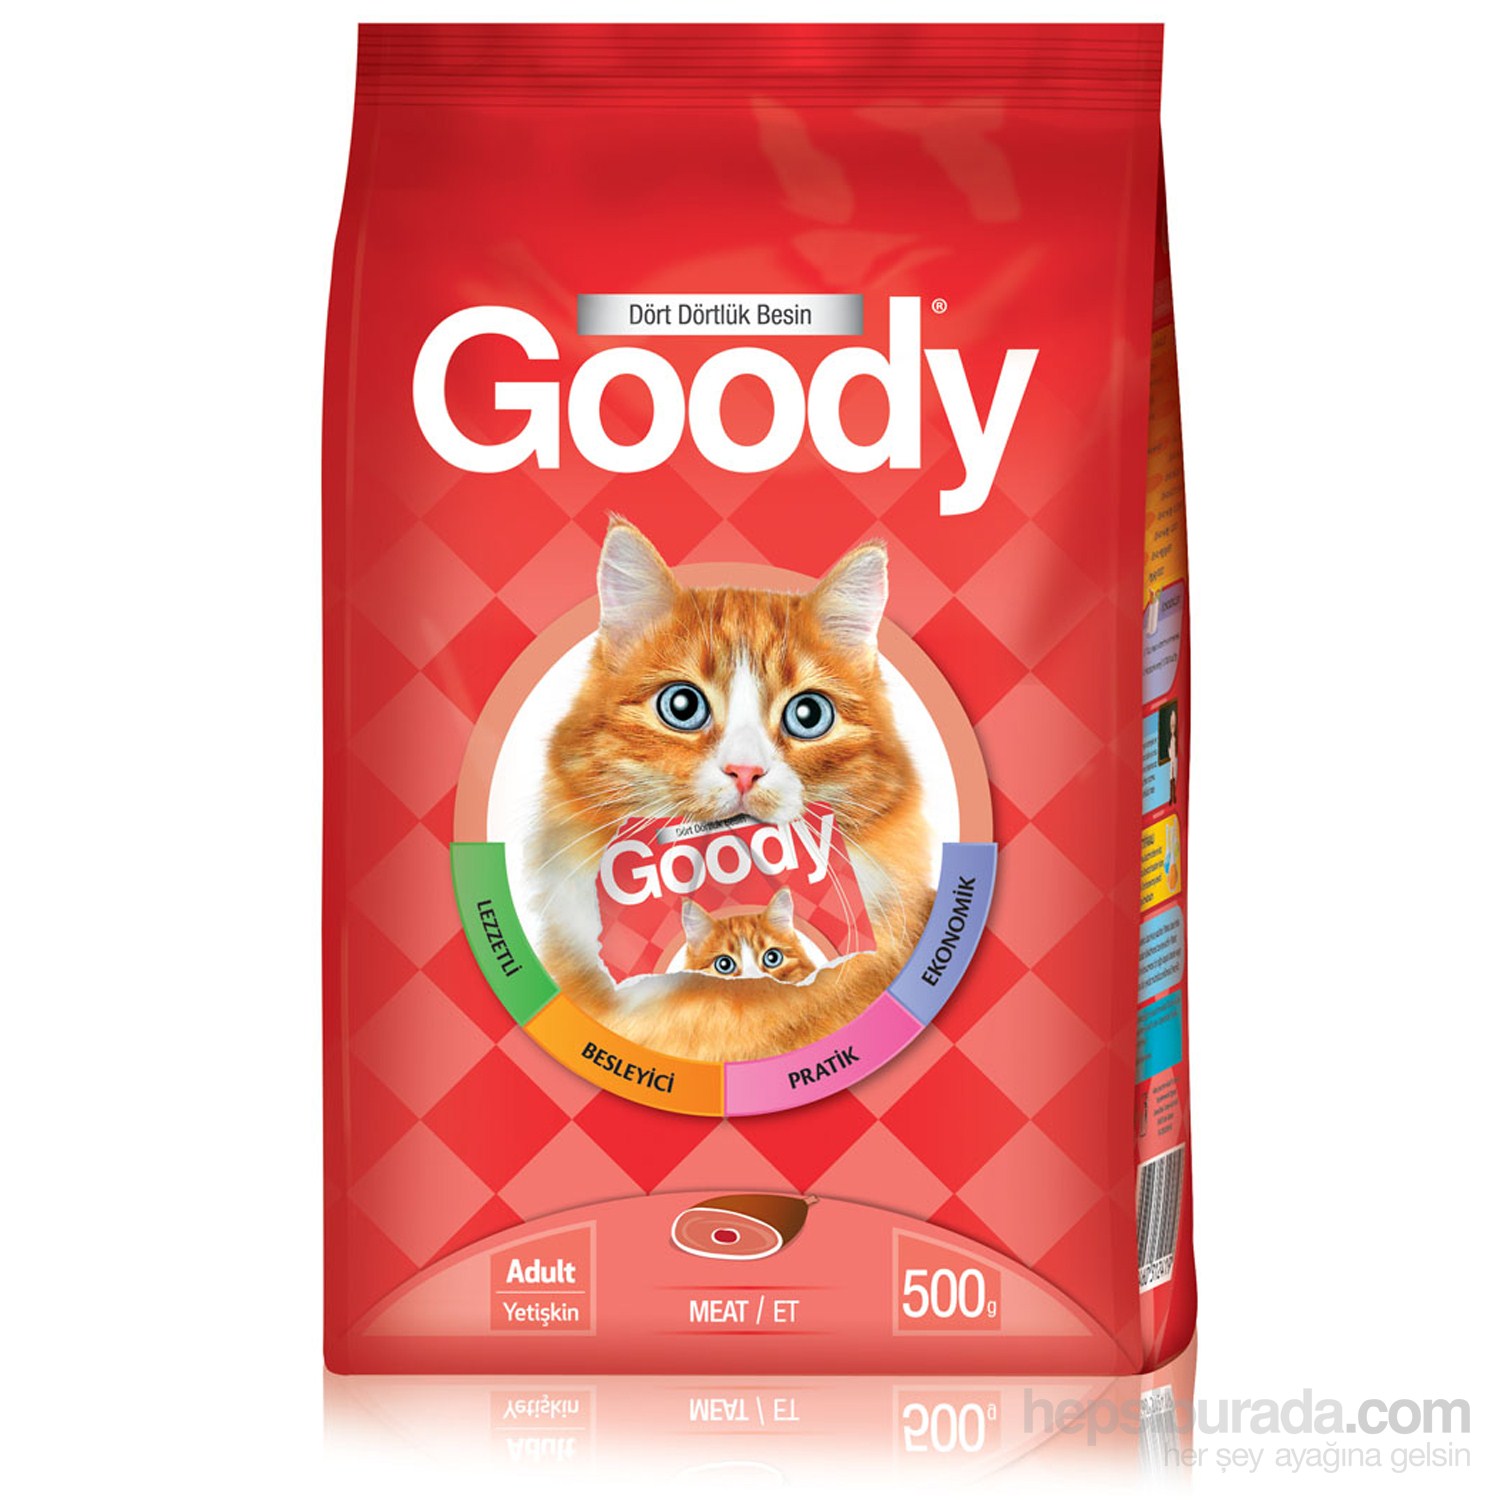 Goody Etli Kedi Maması 0,5 Kg